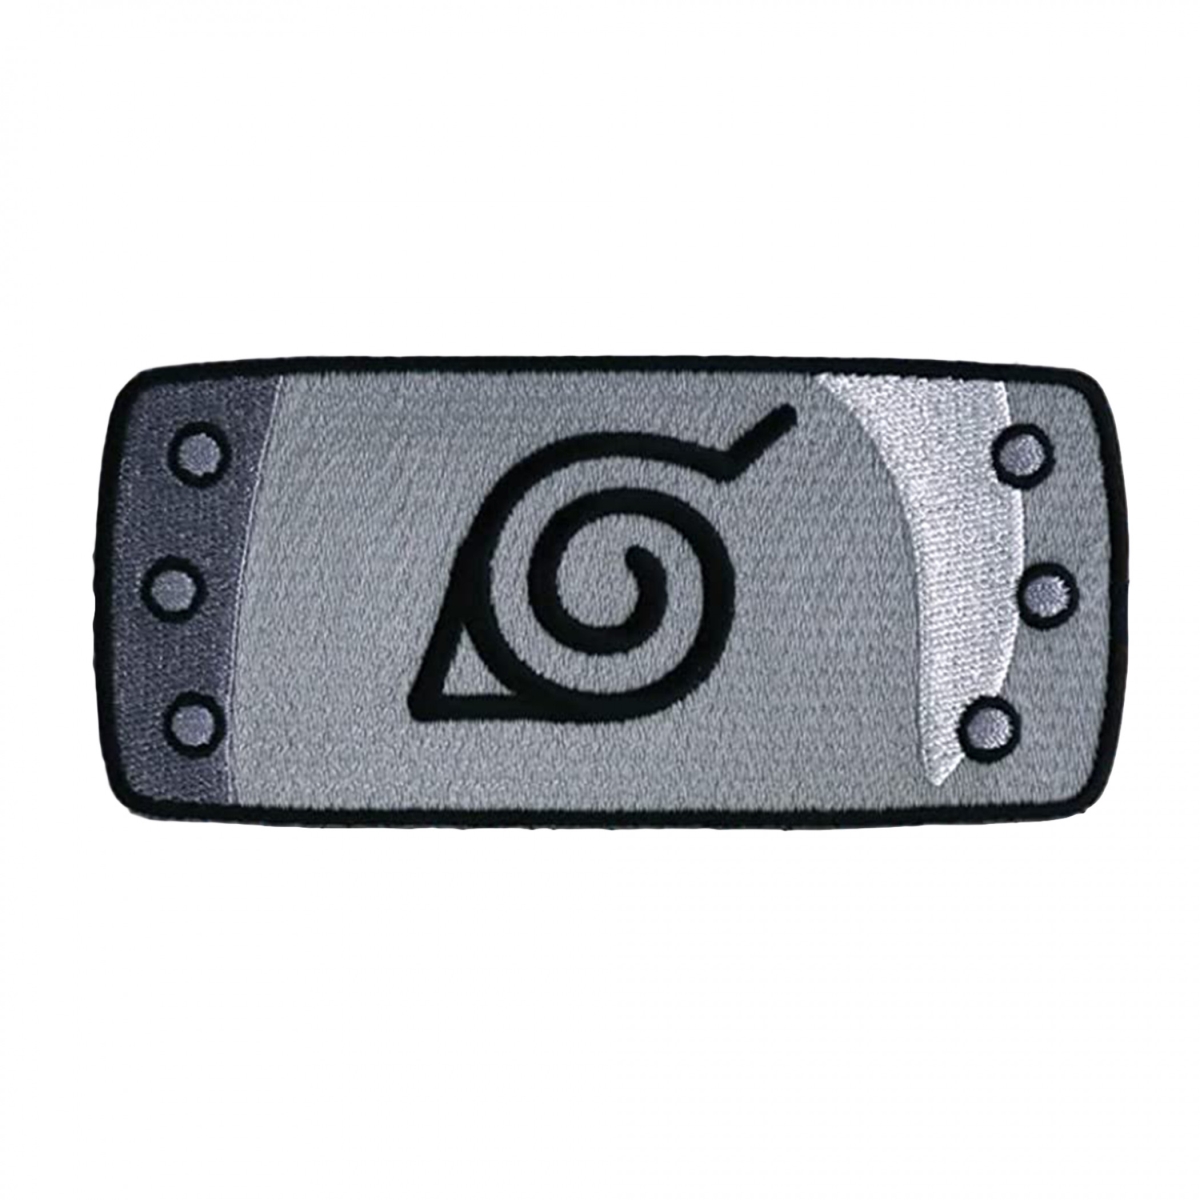 Picture of Naruto 849543 Naruto Shippuden Konohagakure Symbol Headband Iron on Patch